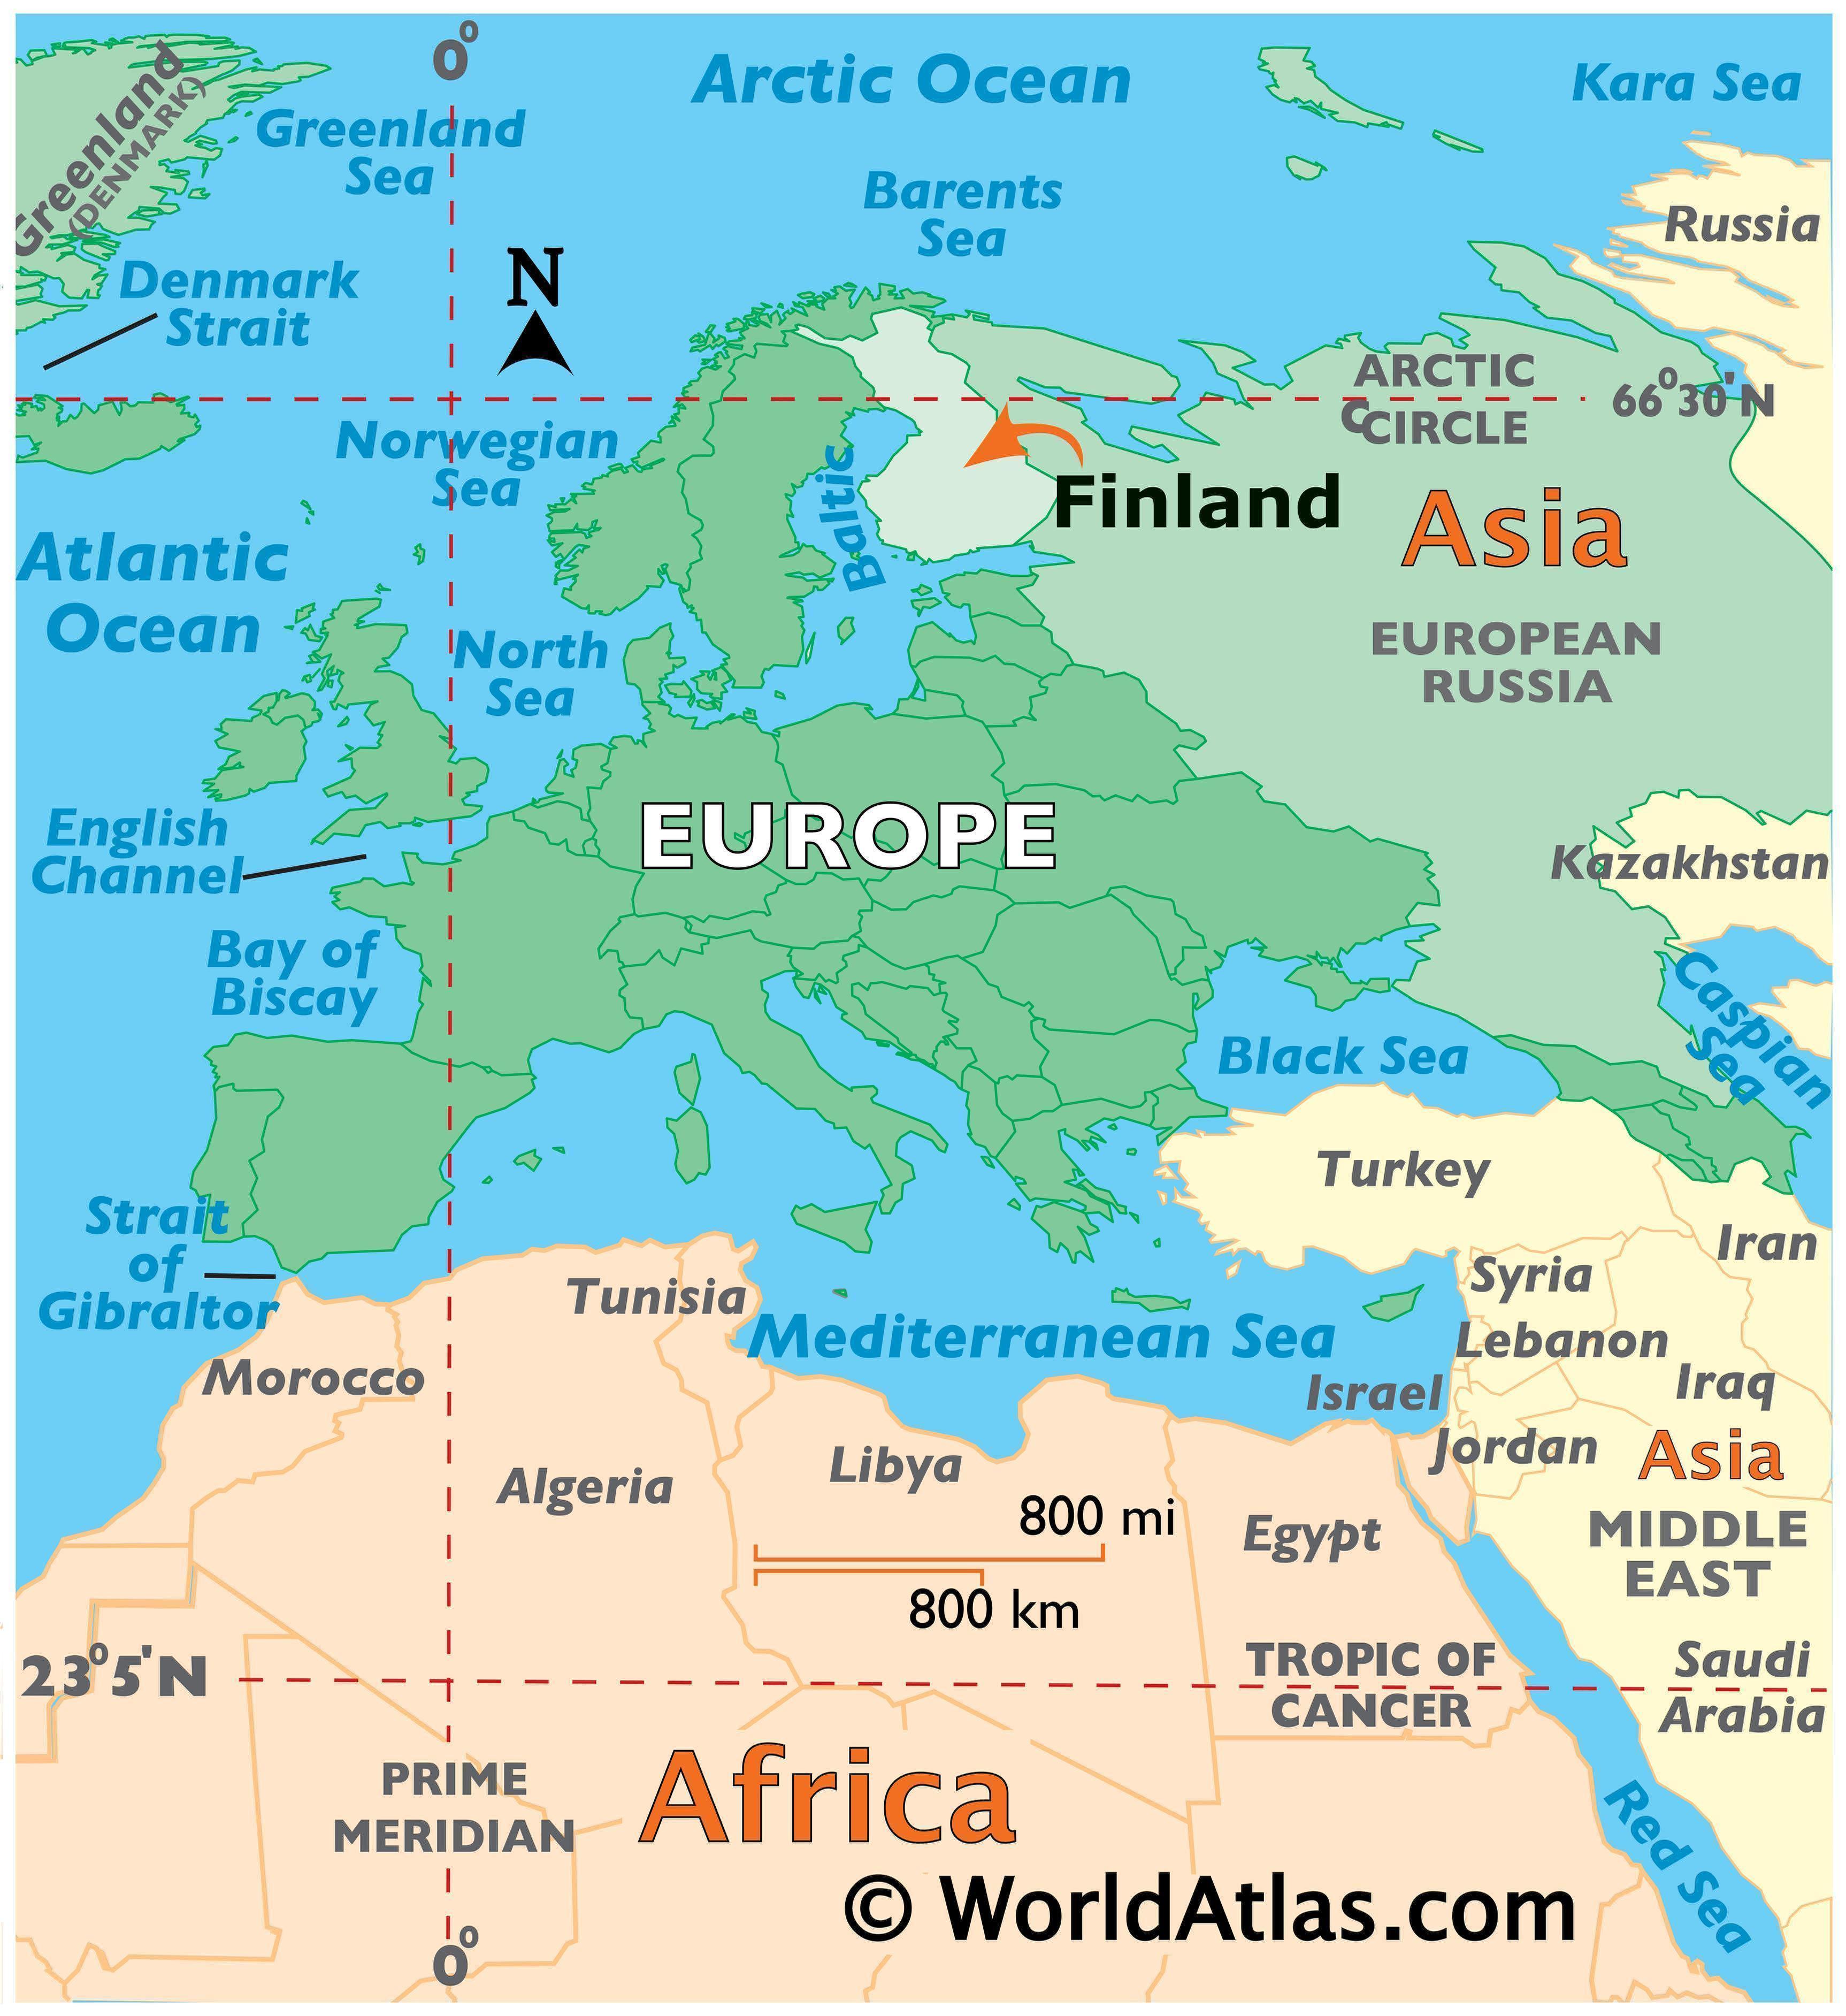 Finland Map / Geography of Finland / Map of Finland - Worldatlas.com